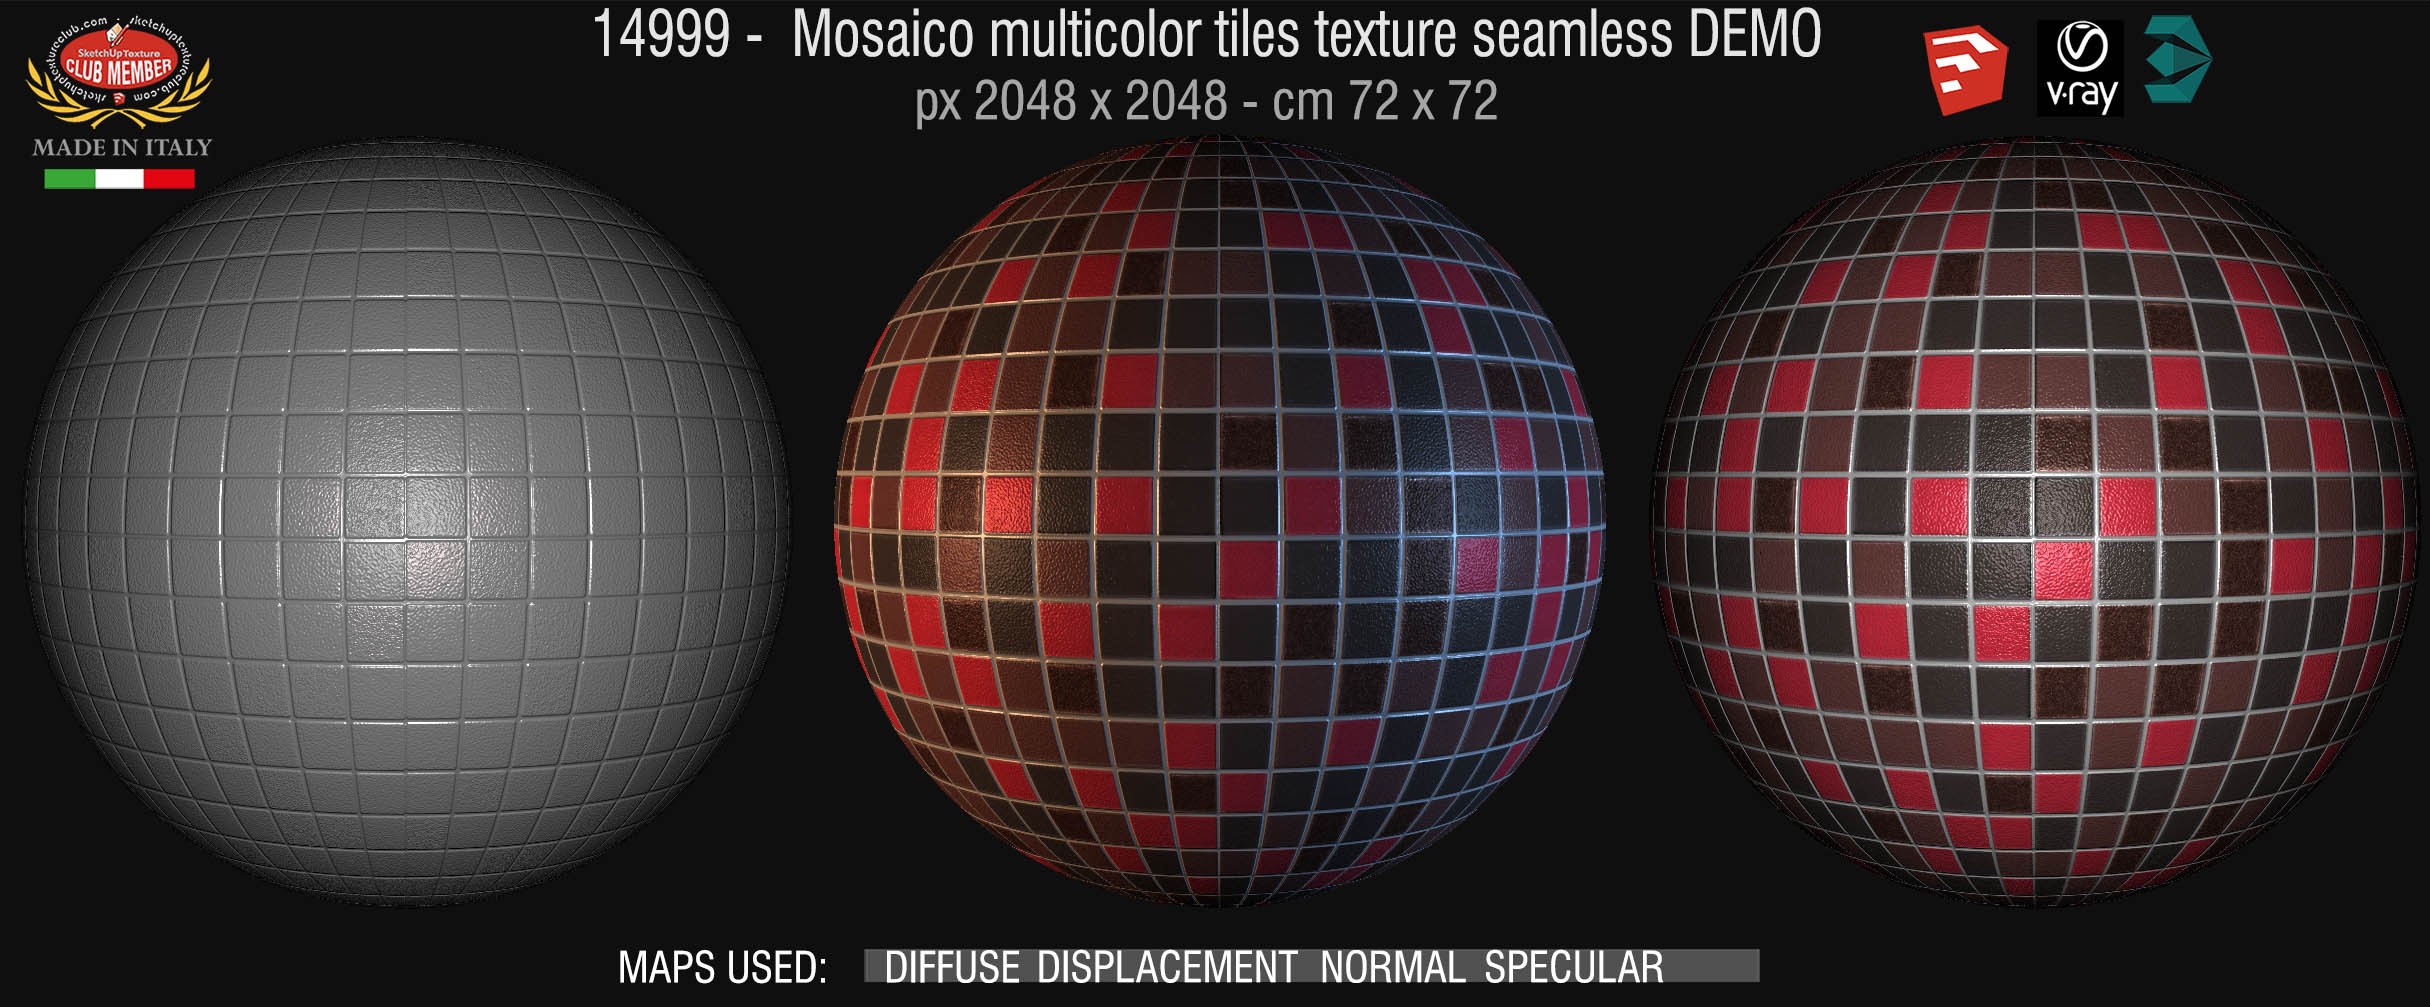 14999 Mosaico multicolor tiles texture seamless + maps DEMO